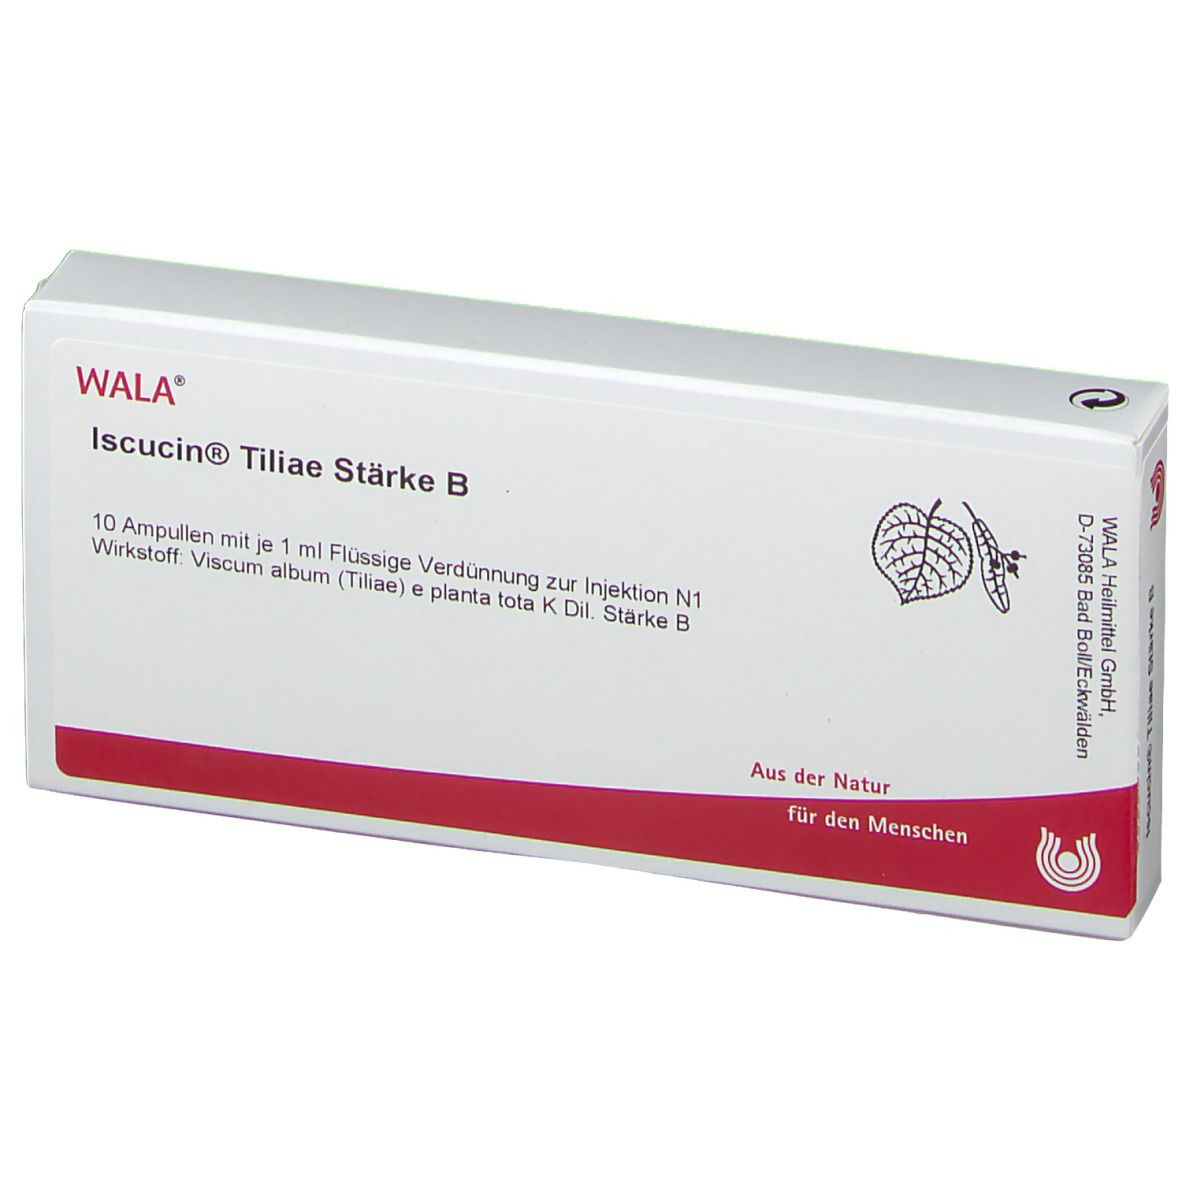 WALA® Iscucin Tiliae St.B Amp.